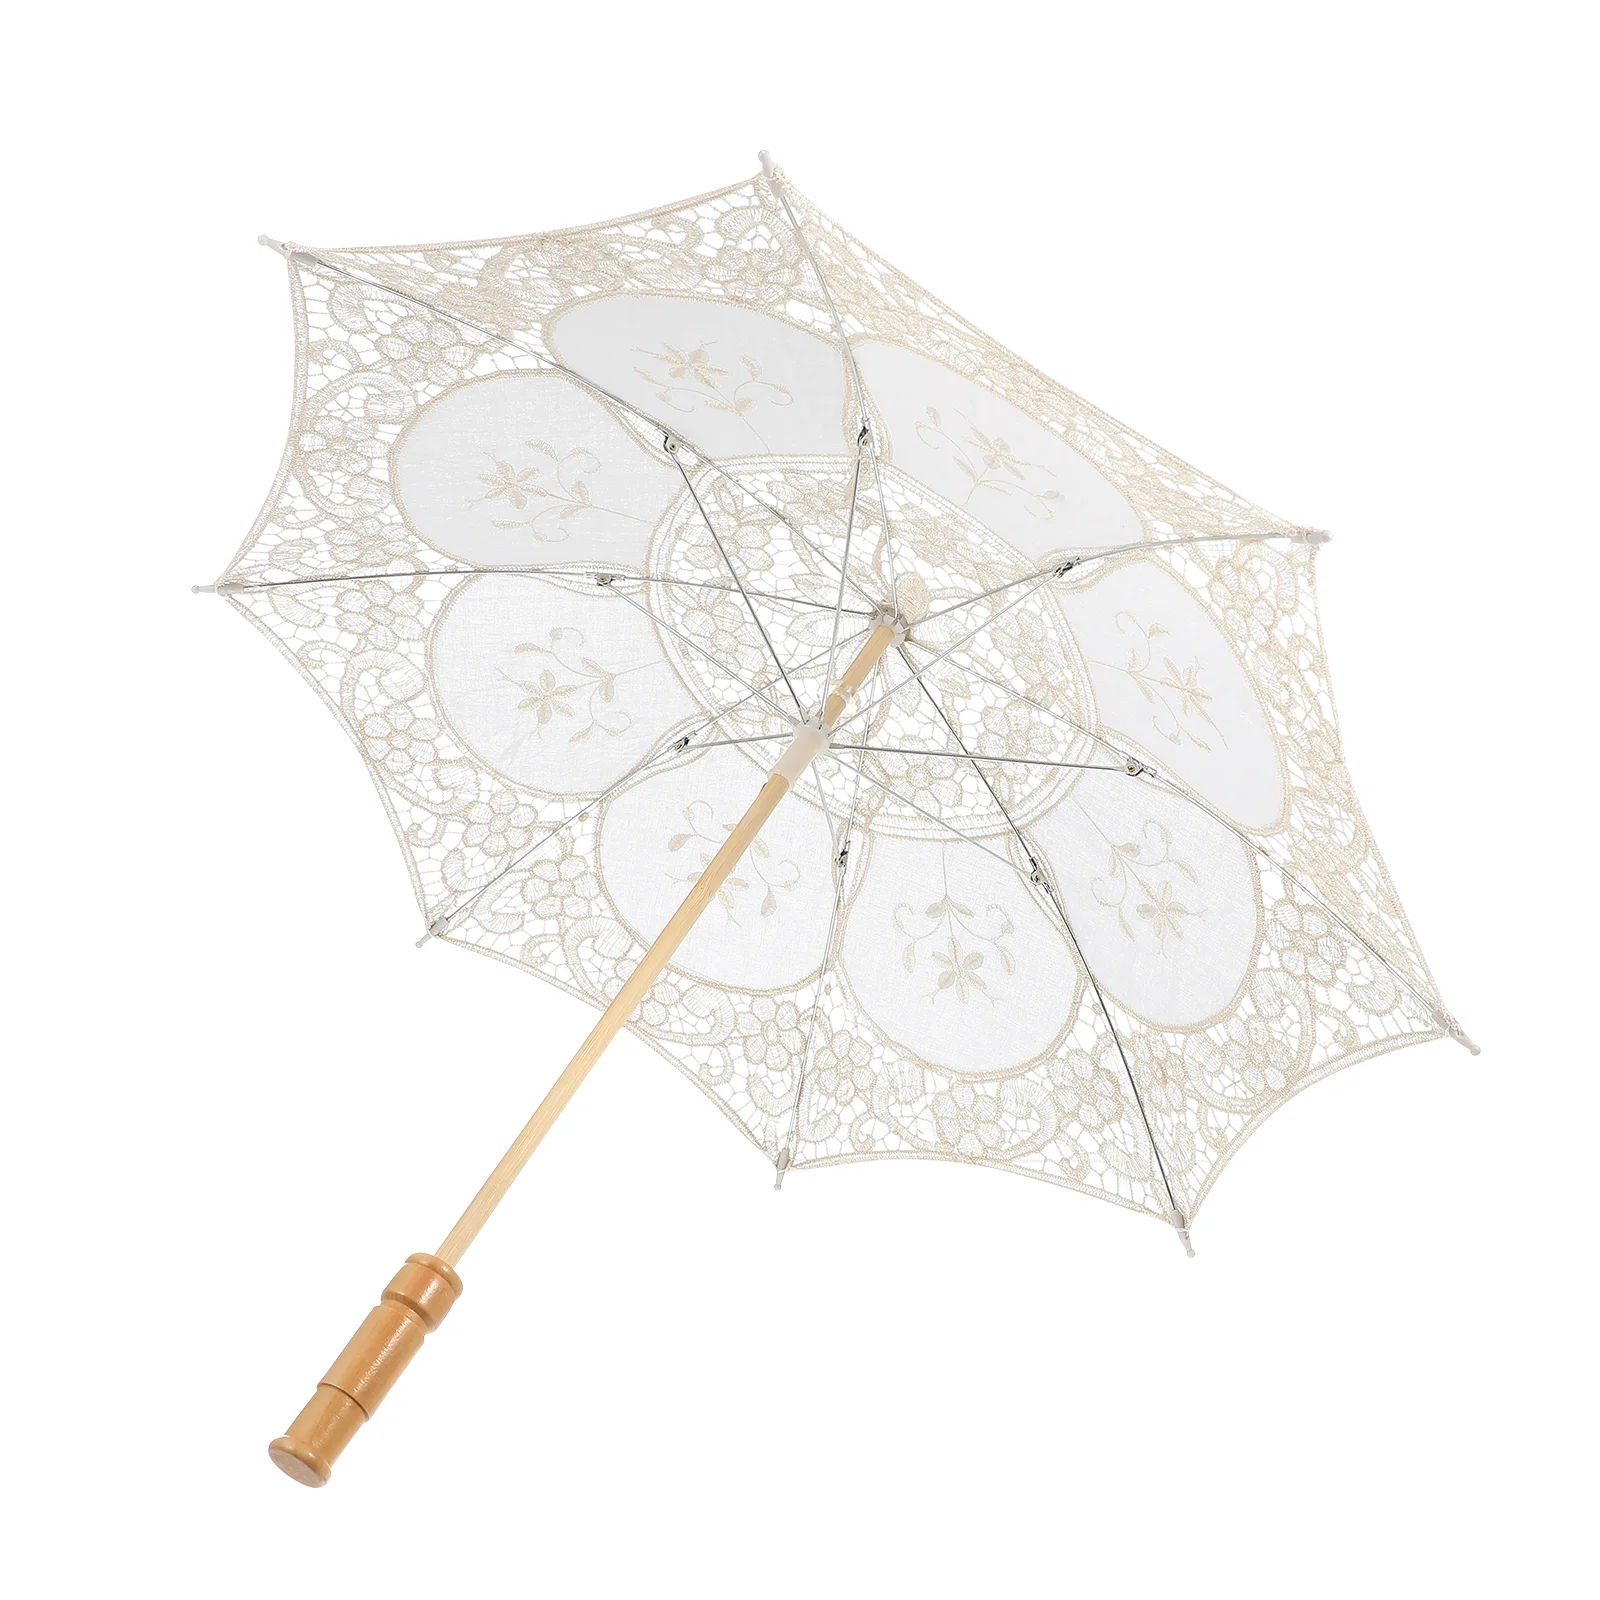 

Toyvian Lace Umbrellaes Handmade Bridal Umbrella Photography Umbrella with Wooden Handle for Wedding Dancing